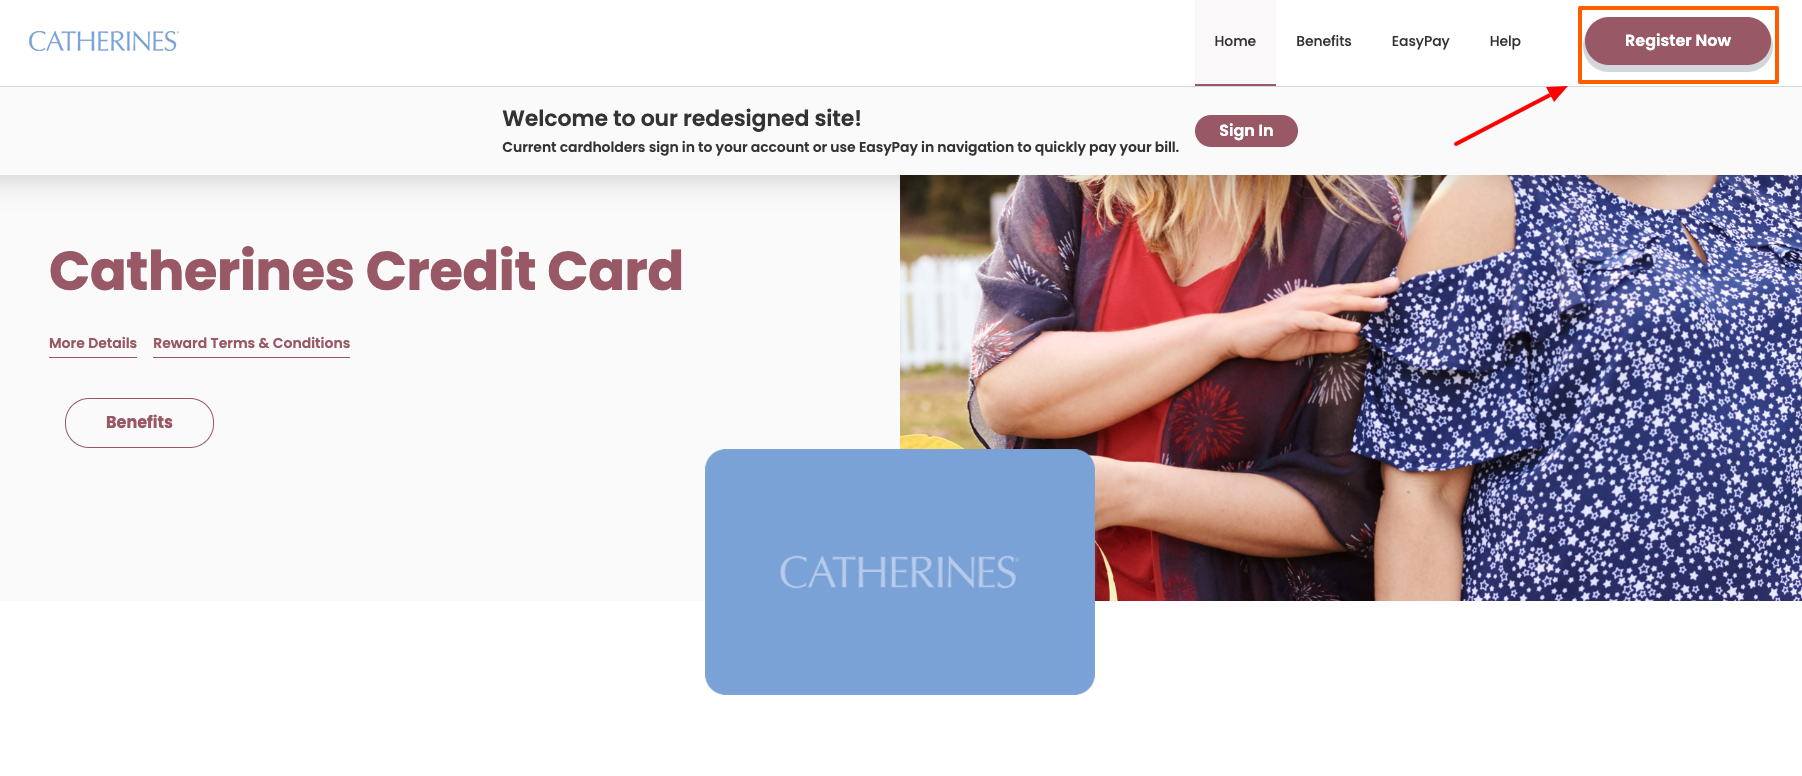 catherines credit card register